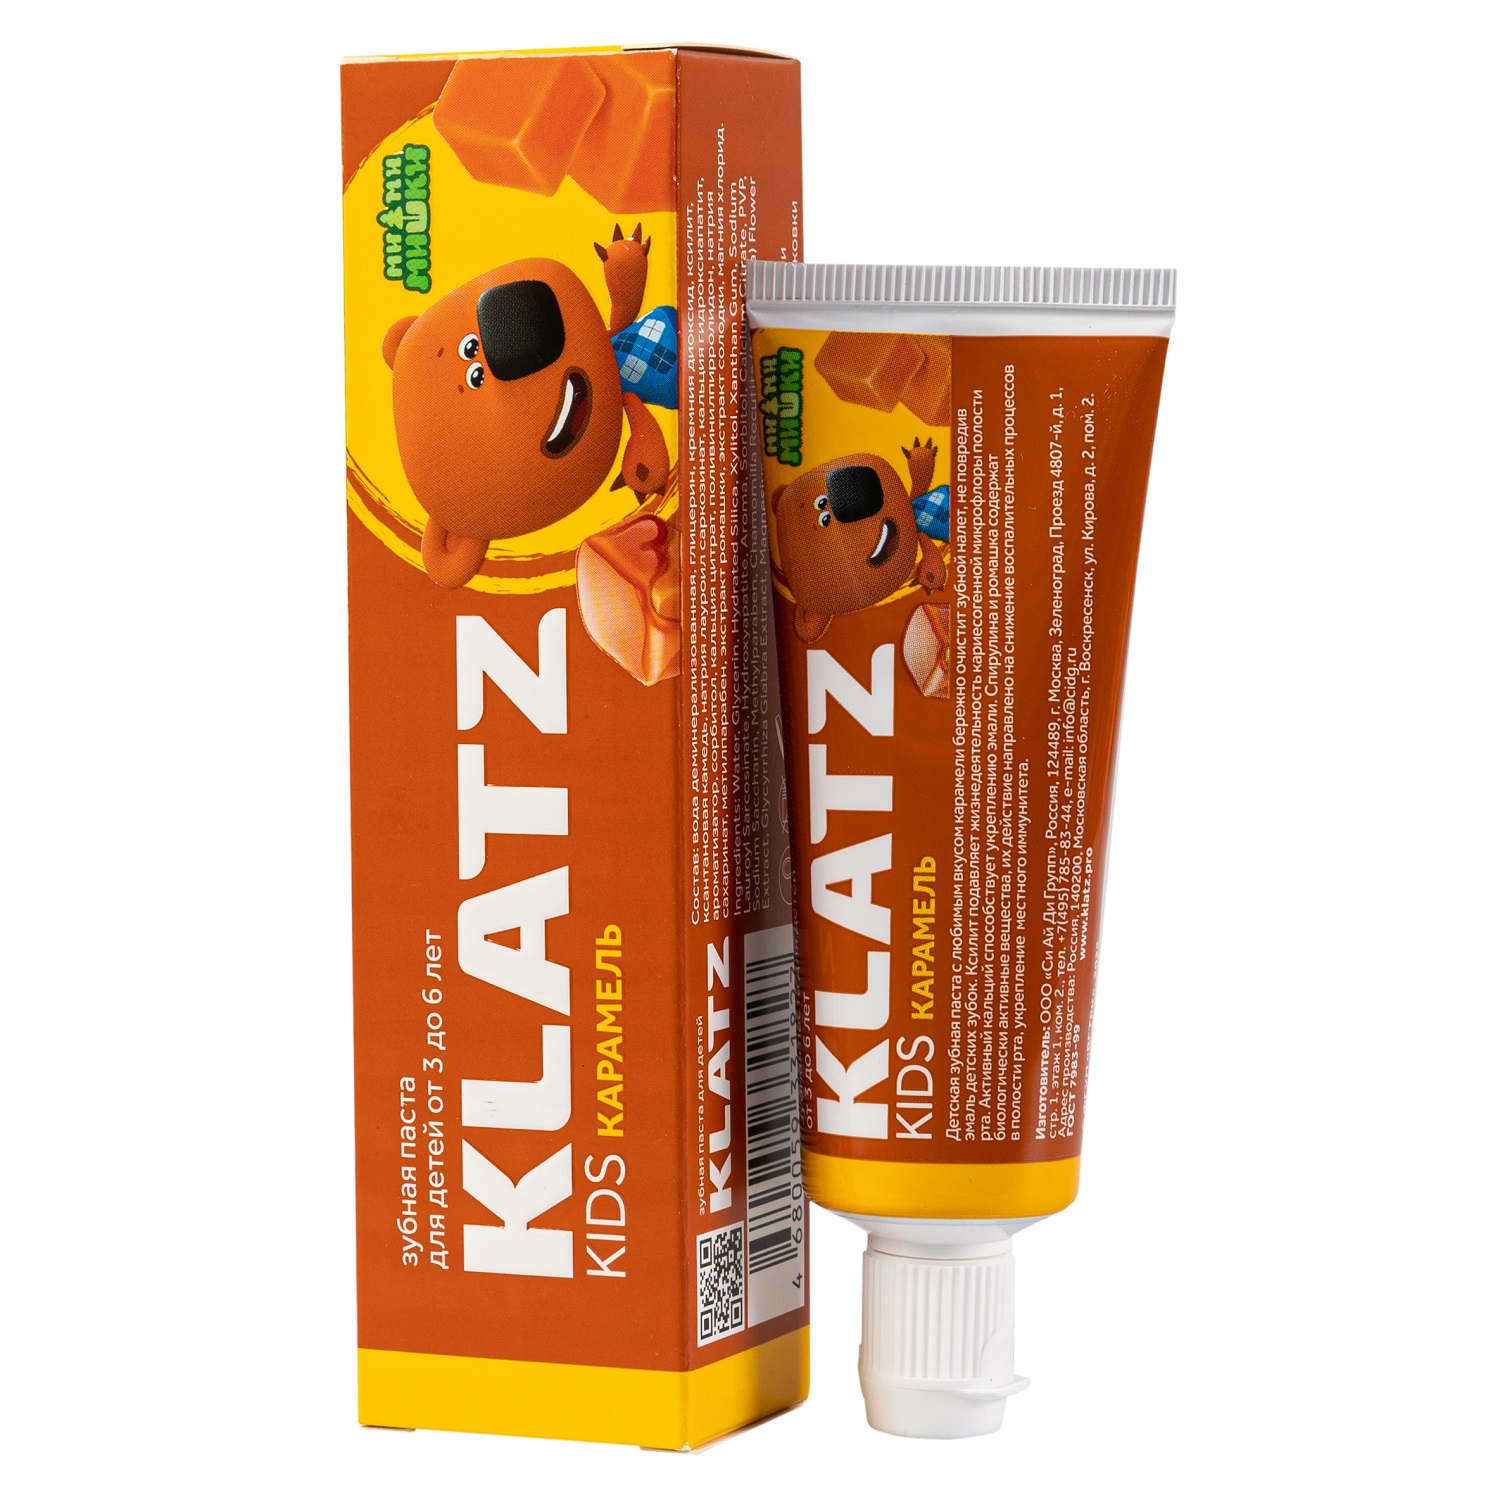 Klatz Детская зубная паста Карамель, 40 мл (Klatz, Ми-ми-мишки) цена и фото